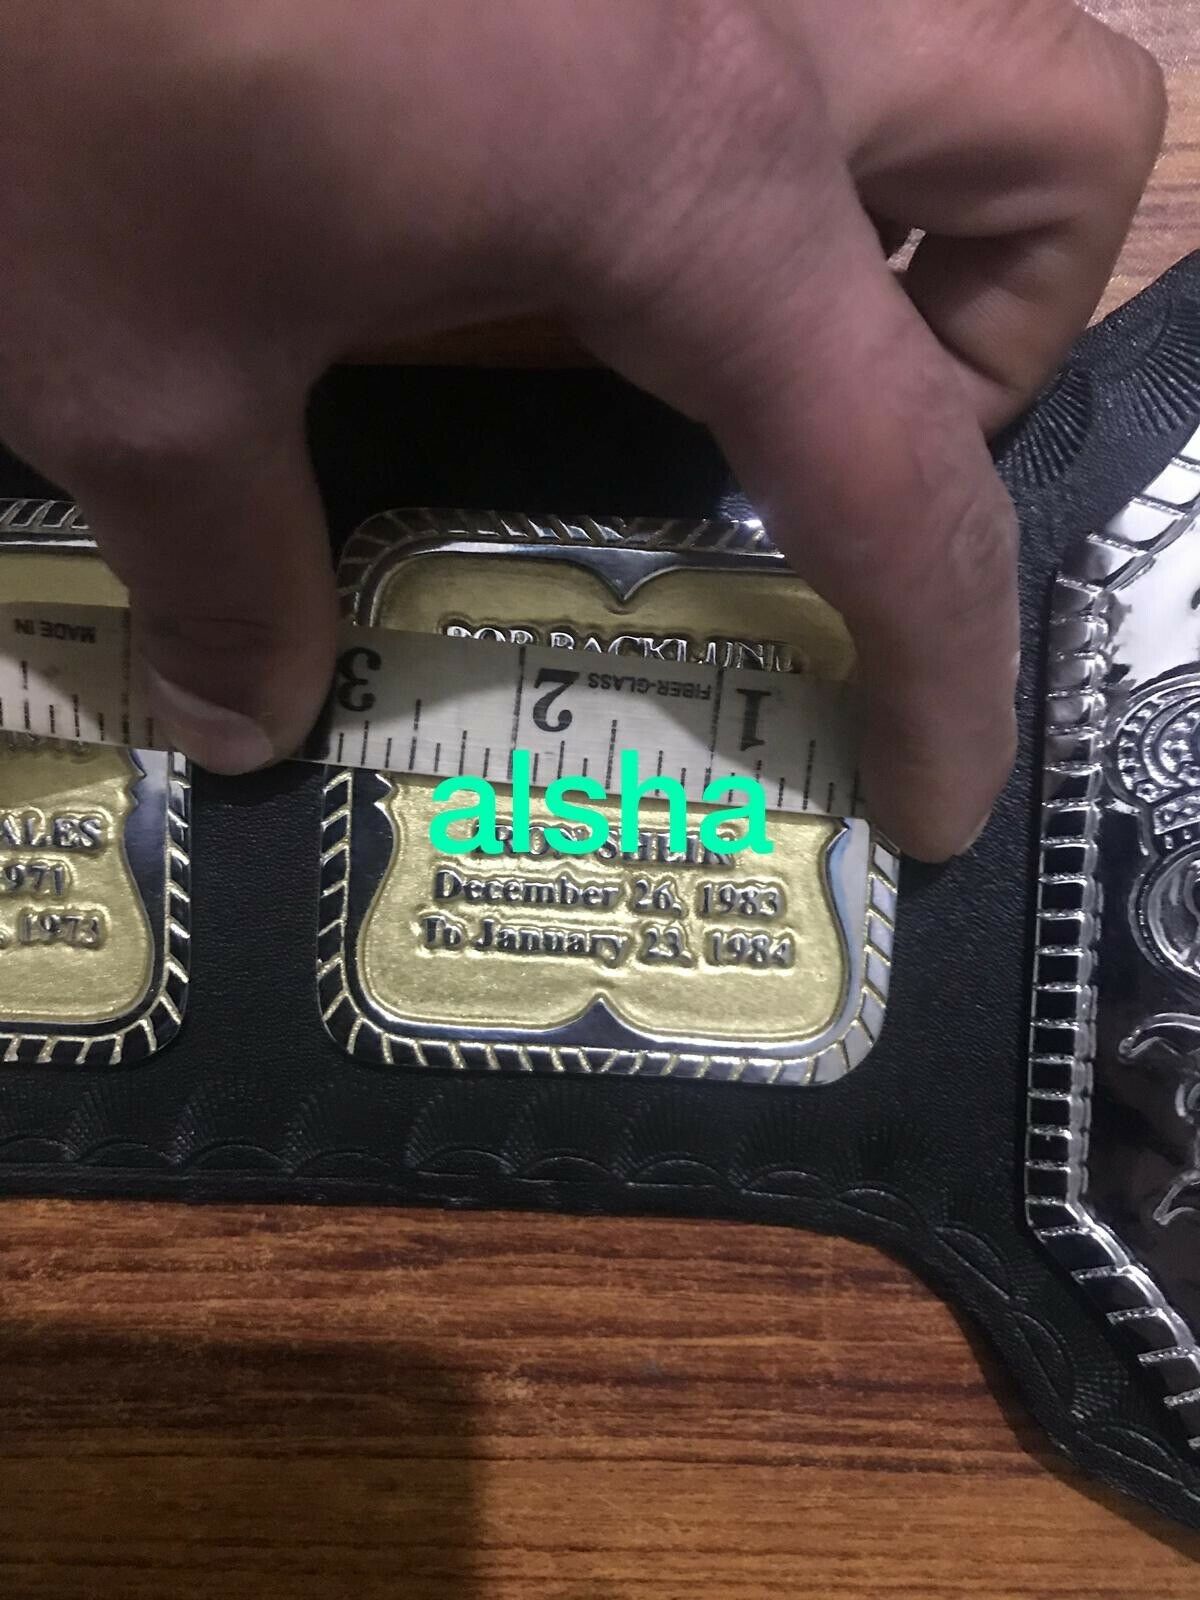 WWF HULK HOGAN 84 Zinc Championship Belt - Zees Belts